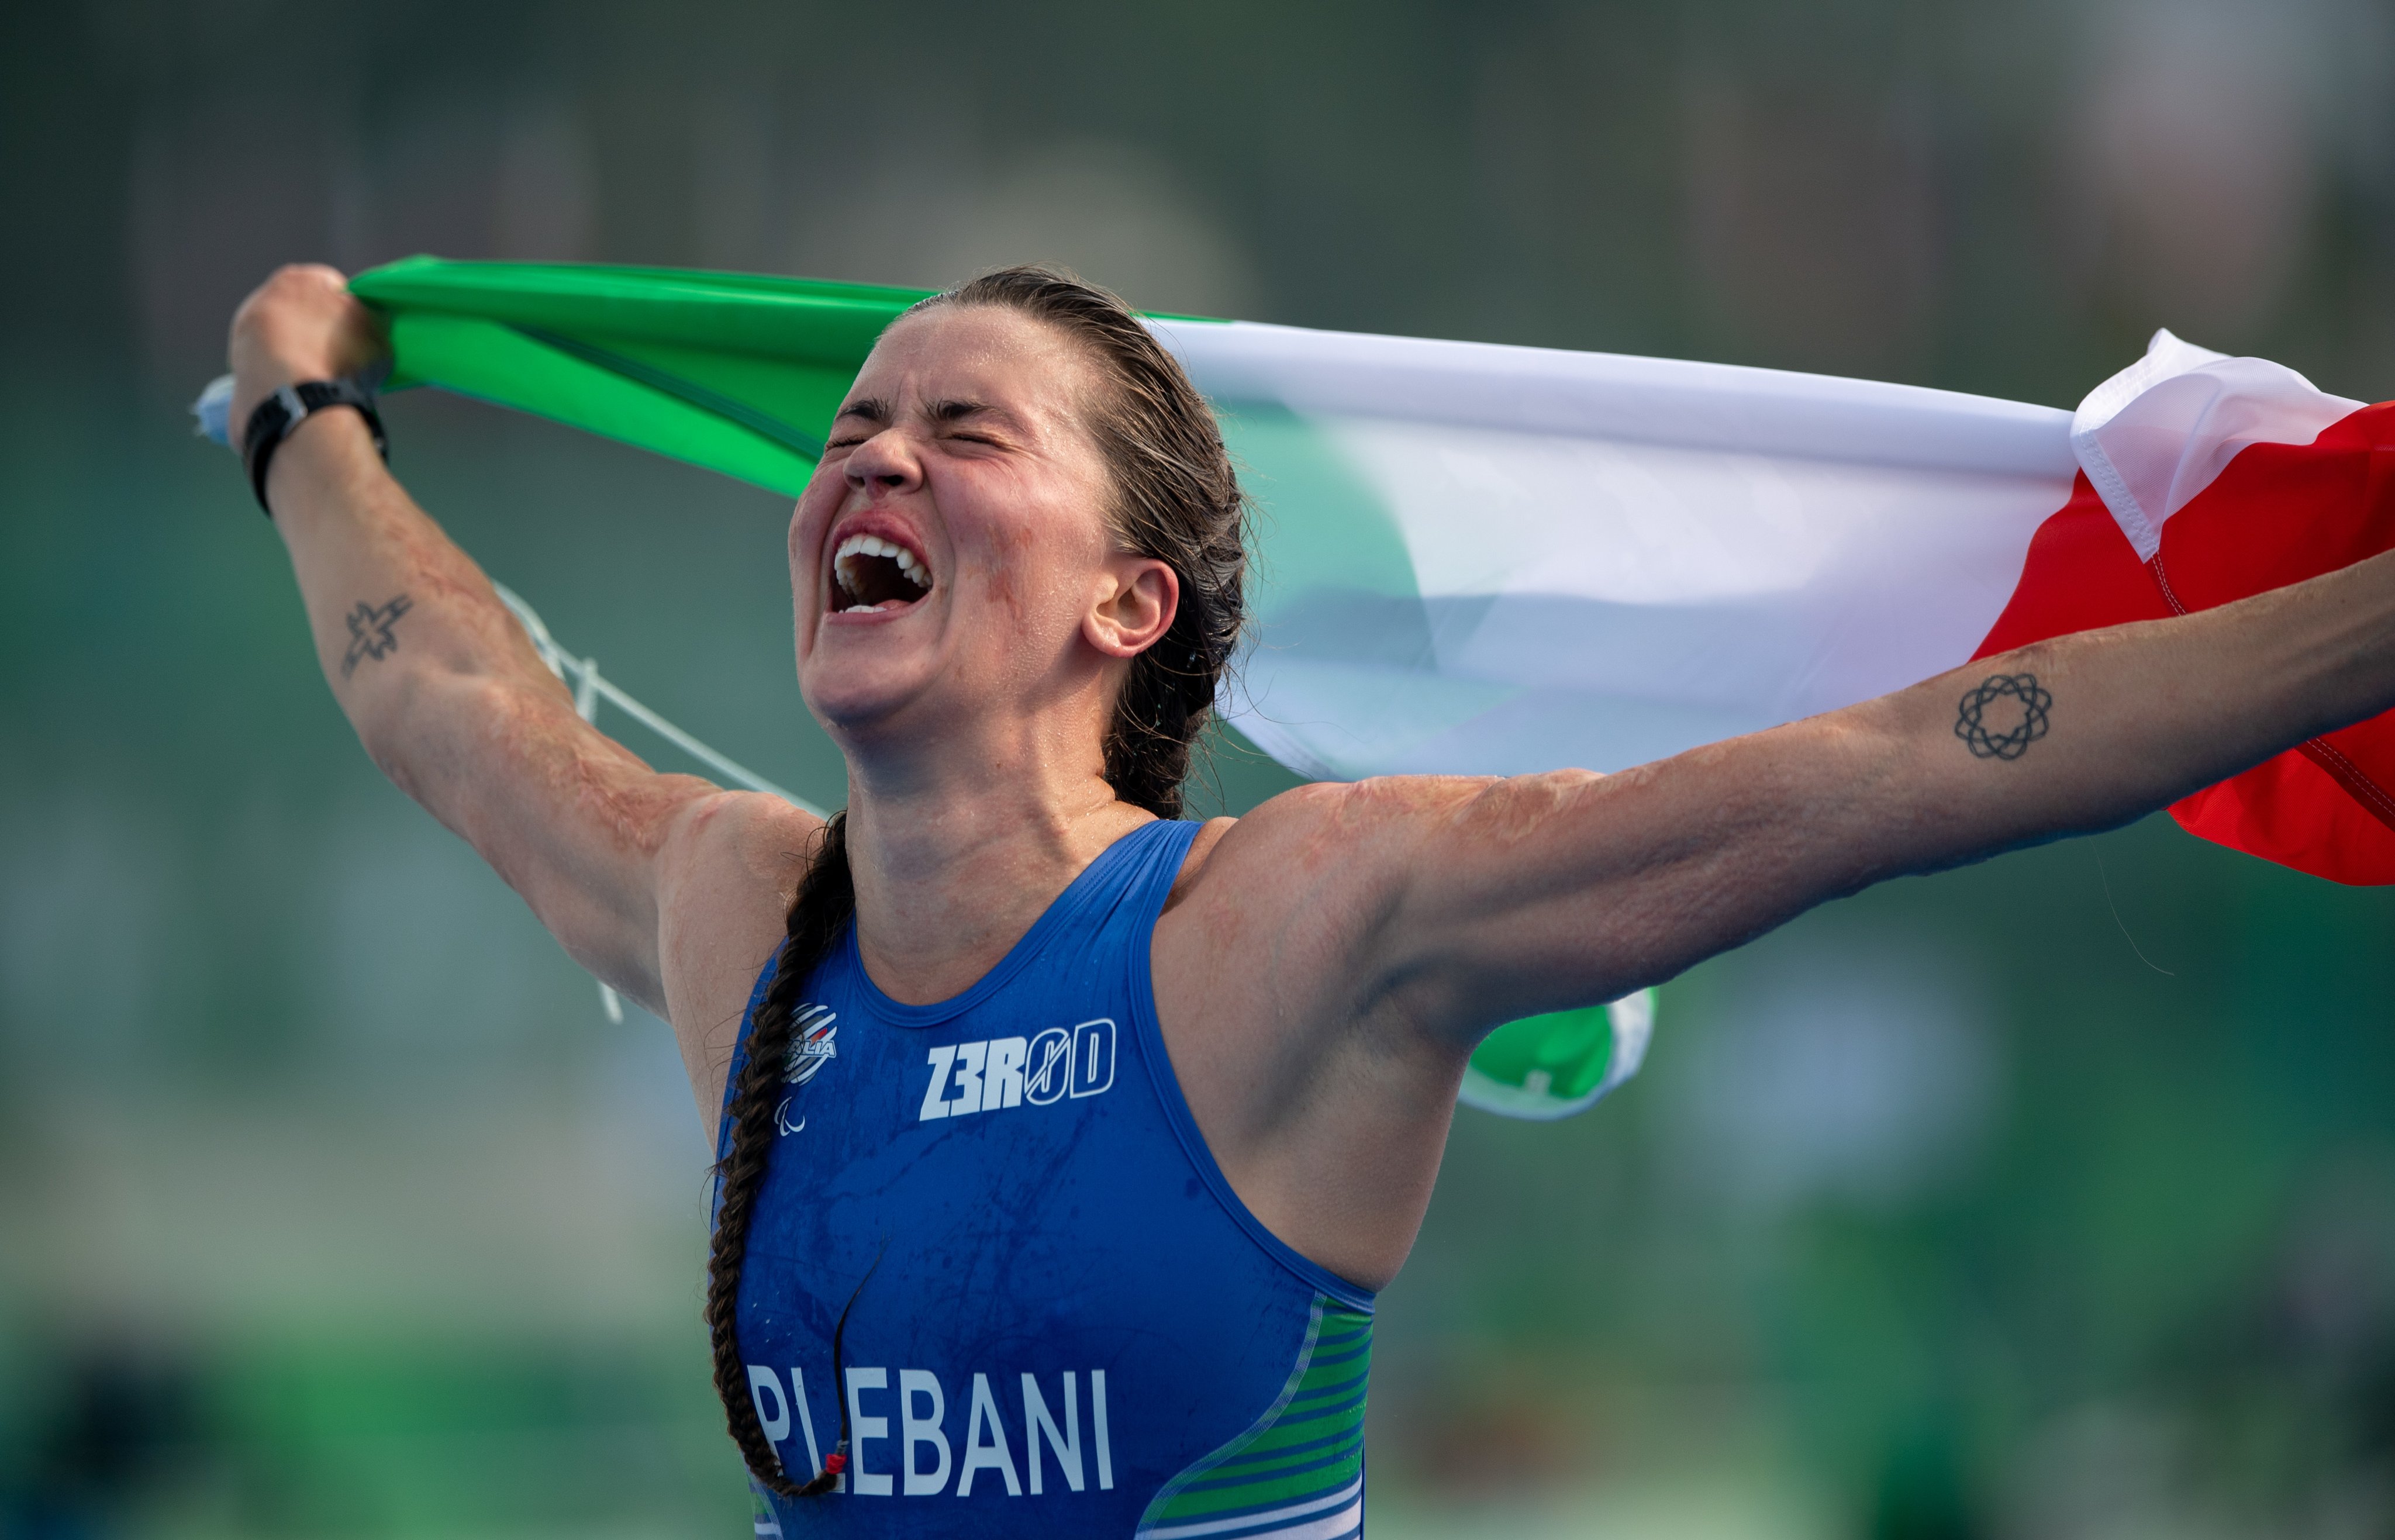 Veronica Yoko Plebani è medaglia di bronzo ai Giochi Paralimpici di Tokyo 2020